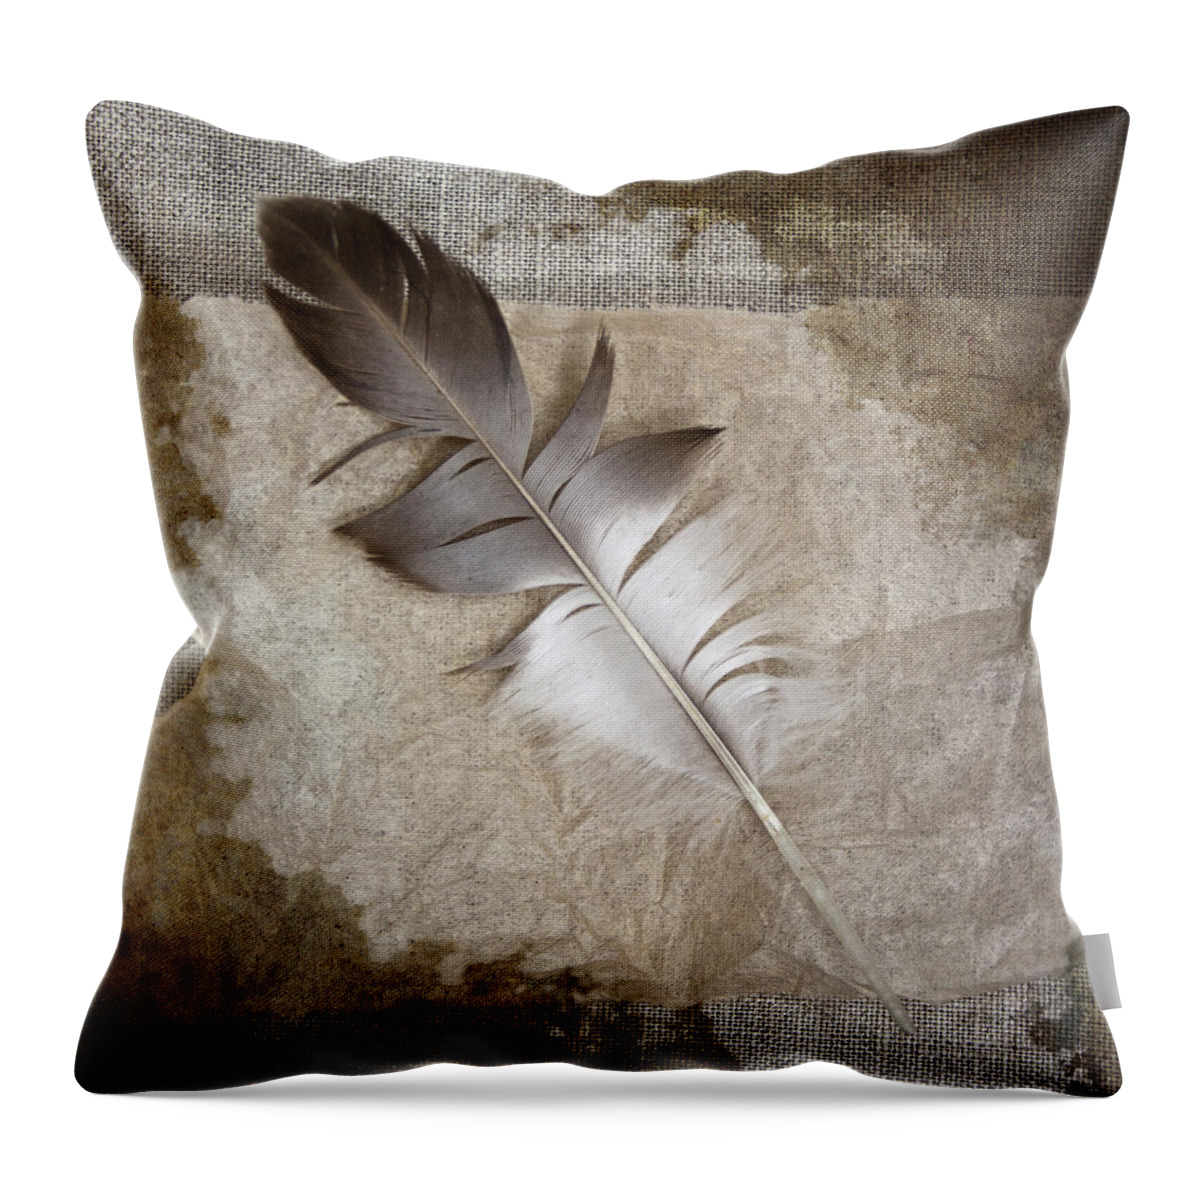 Carol Leigh Throw Pillow featuring the photograph Tea Feather by Carol Leigh